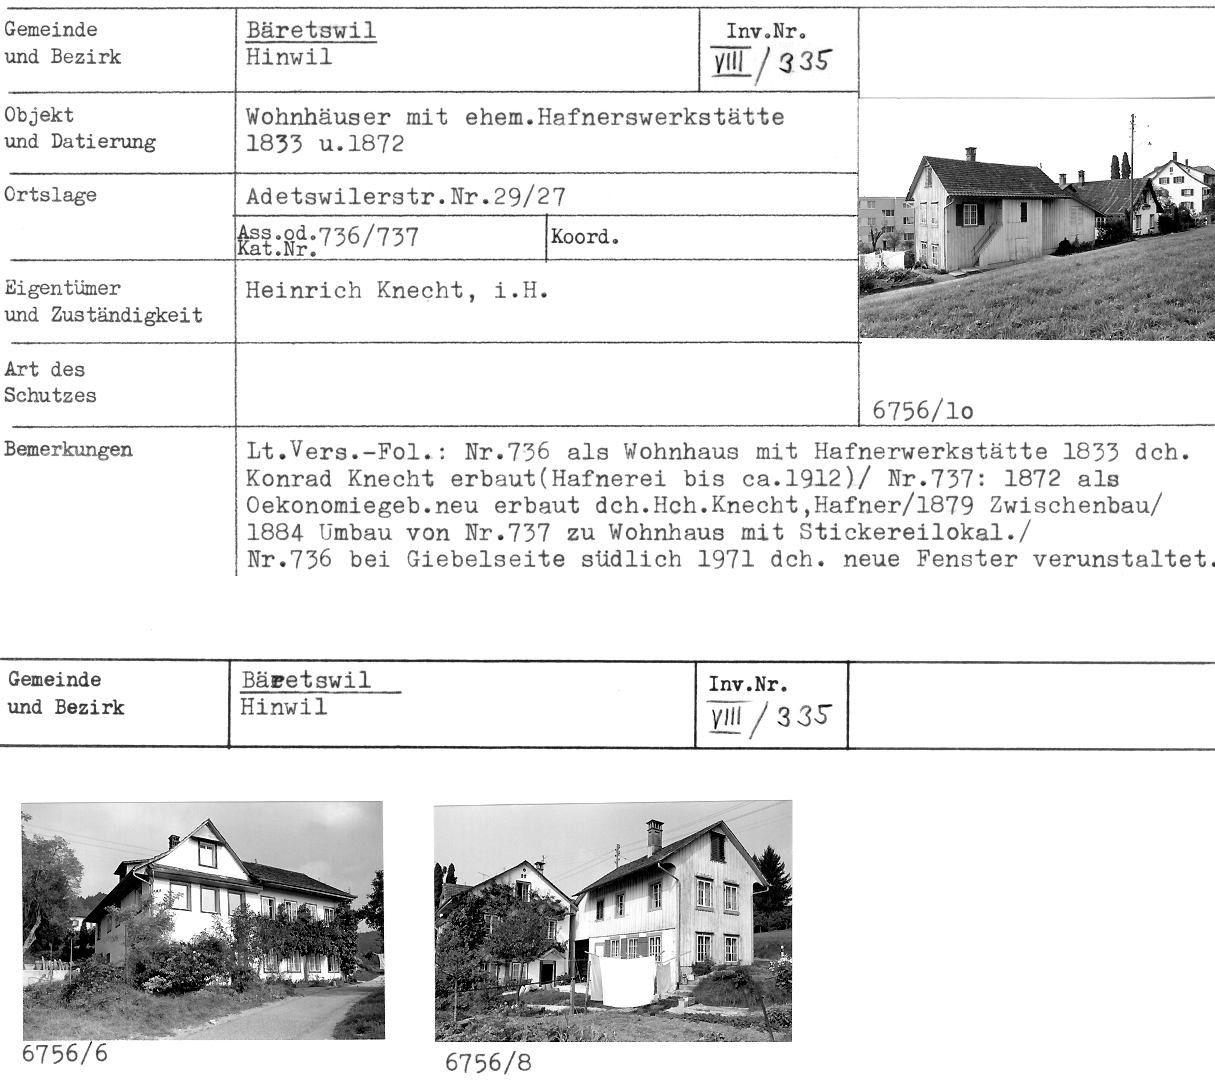 Wohnhäuser mit ehem. Hafnerwerkstätte, 1833 & 1872, Adetswil, Adetswilerstrasse 27/29